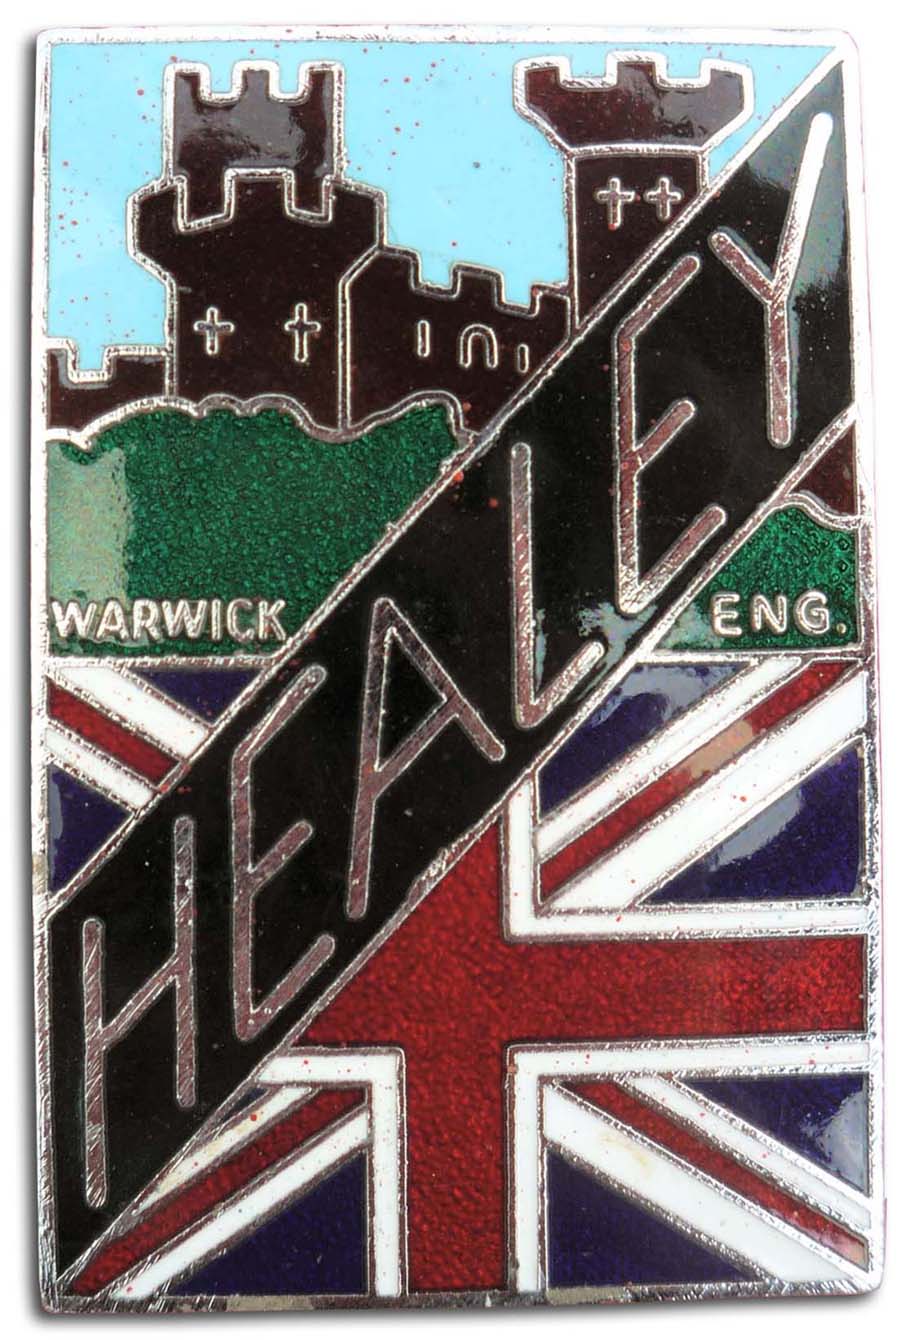 1949-1950. Healey Silverstone (grille emblem)